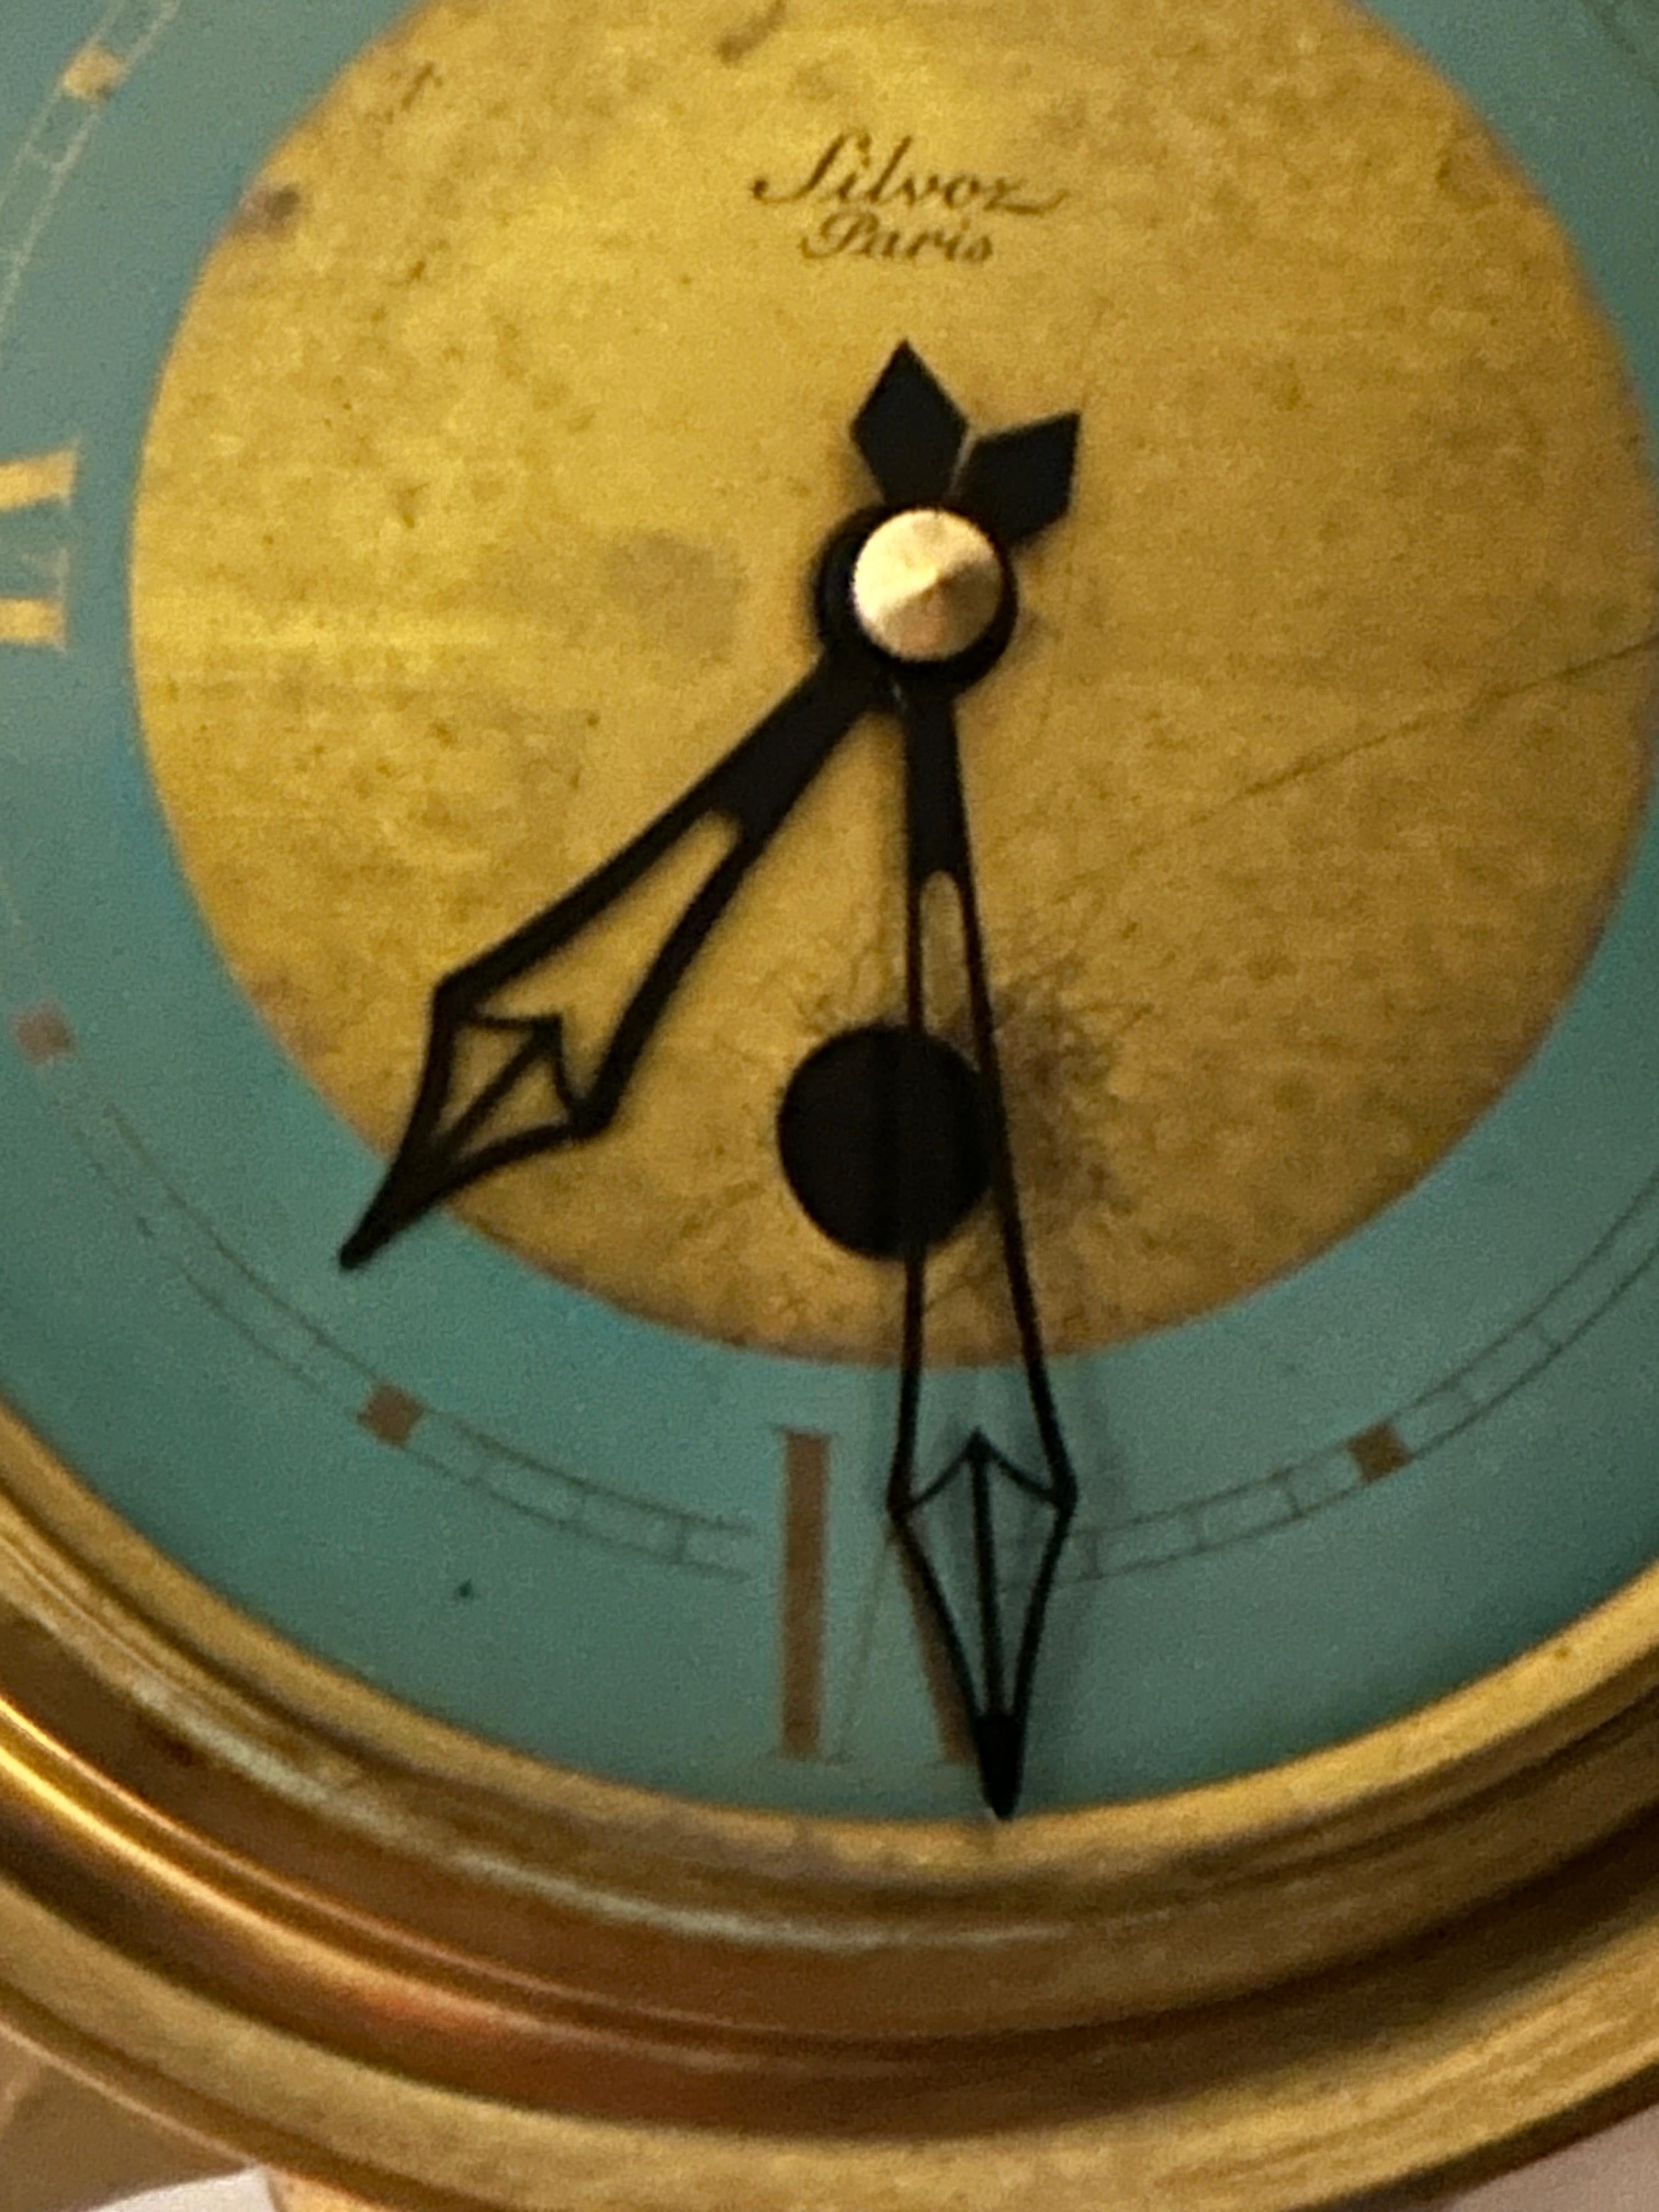 1930s French Art Deco 'Cartel Silvoz Paris' Sunburst Brass Wall Hanging Clock For Sale 9